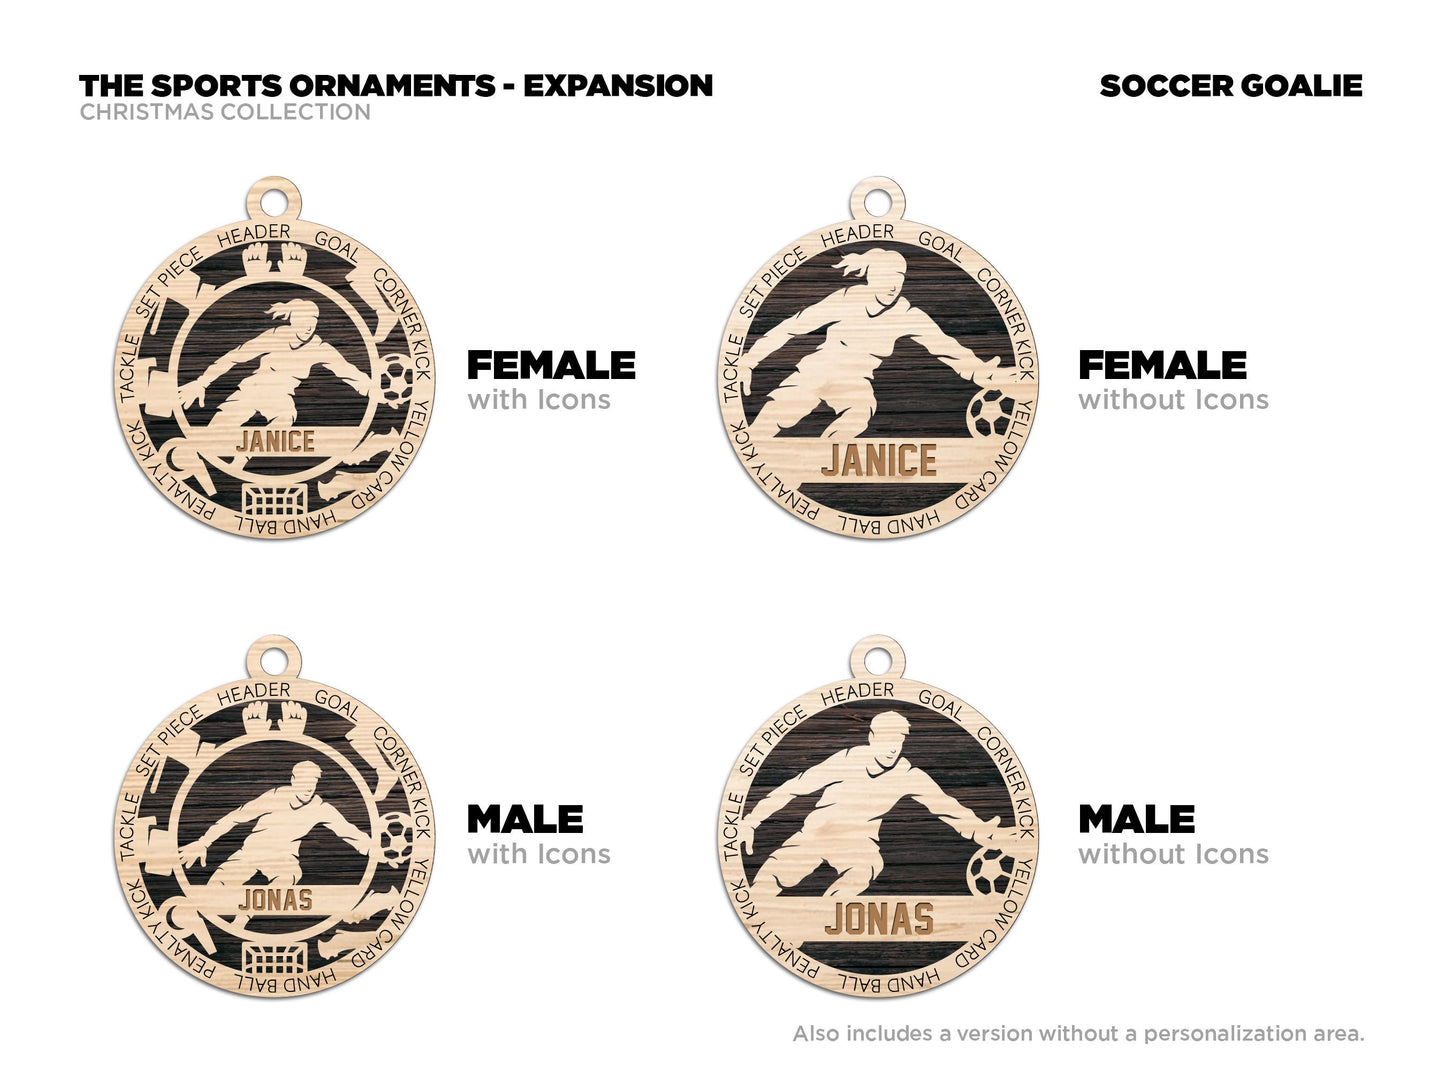 Soccer Goalie - Stadium Series Ornaments - 4 Unique designs - SVG, PDF, AI File Download - Sized for Glowforge